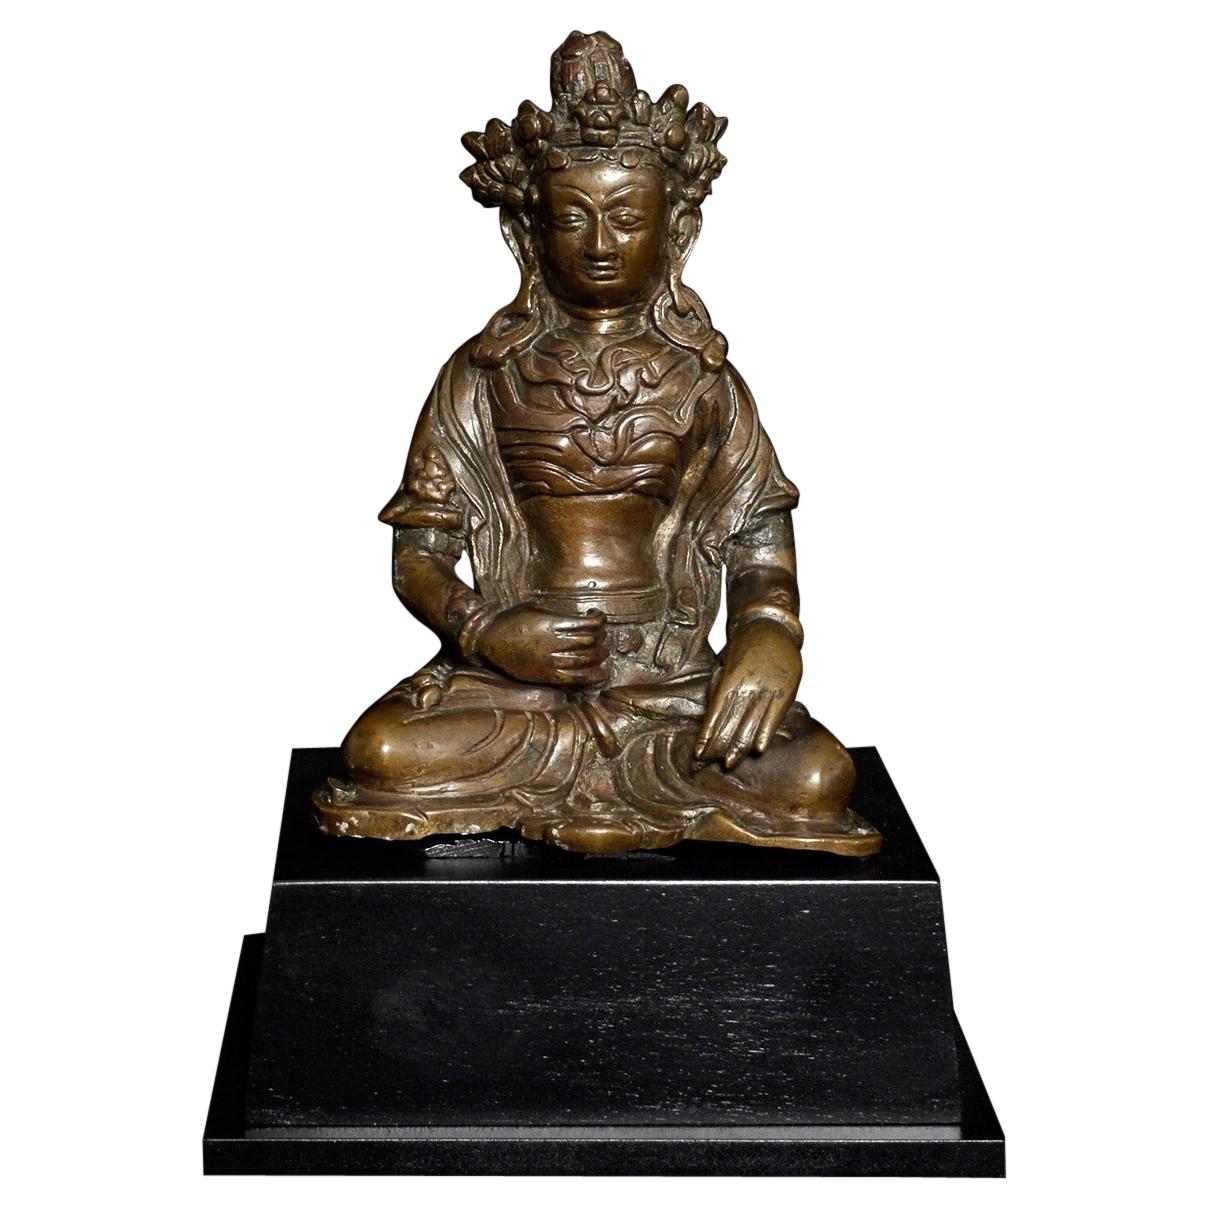 18thC Tibetan Buddha or Bodhisattva. Rare and Fine - 9460